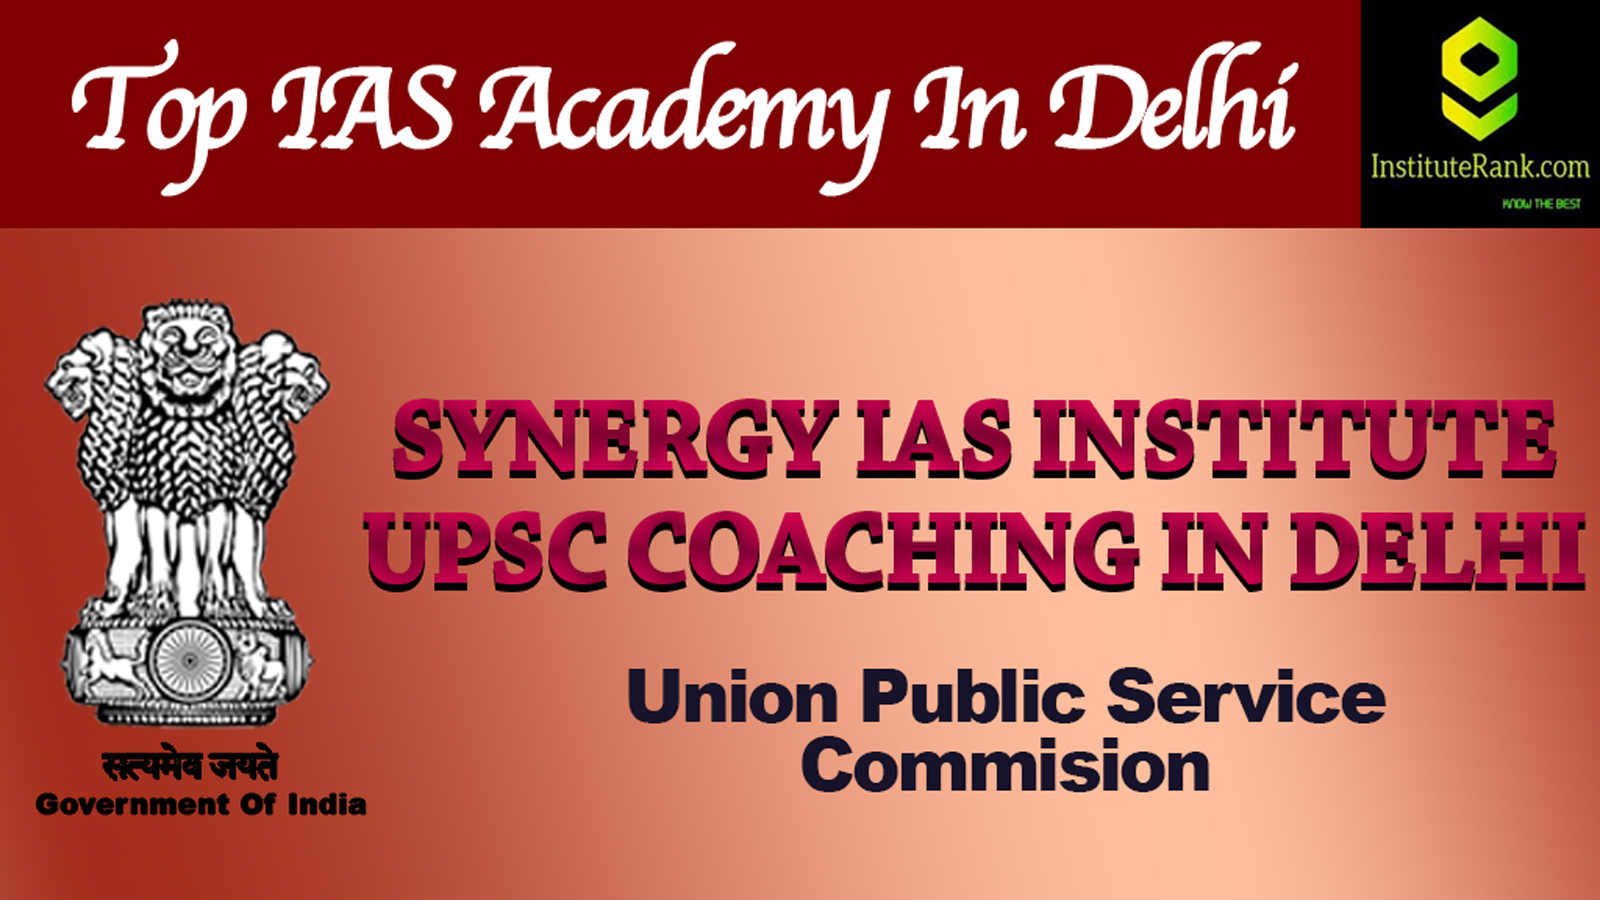 Synergy IAS Institute UPSC Coaching in Delhi